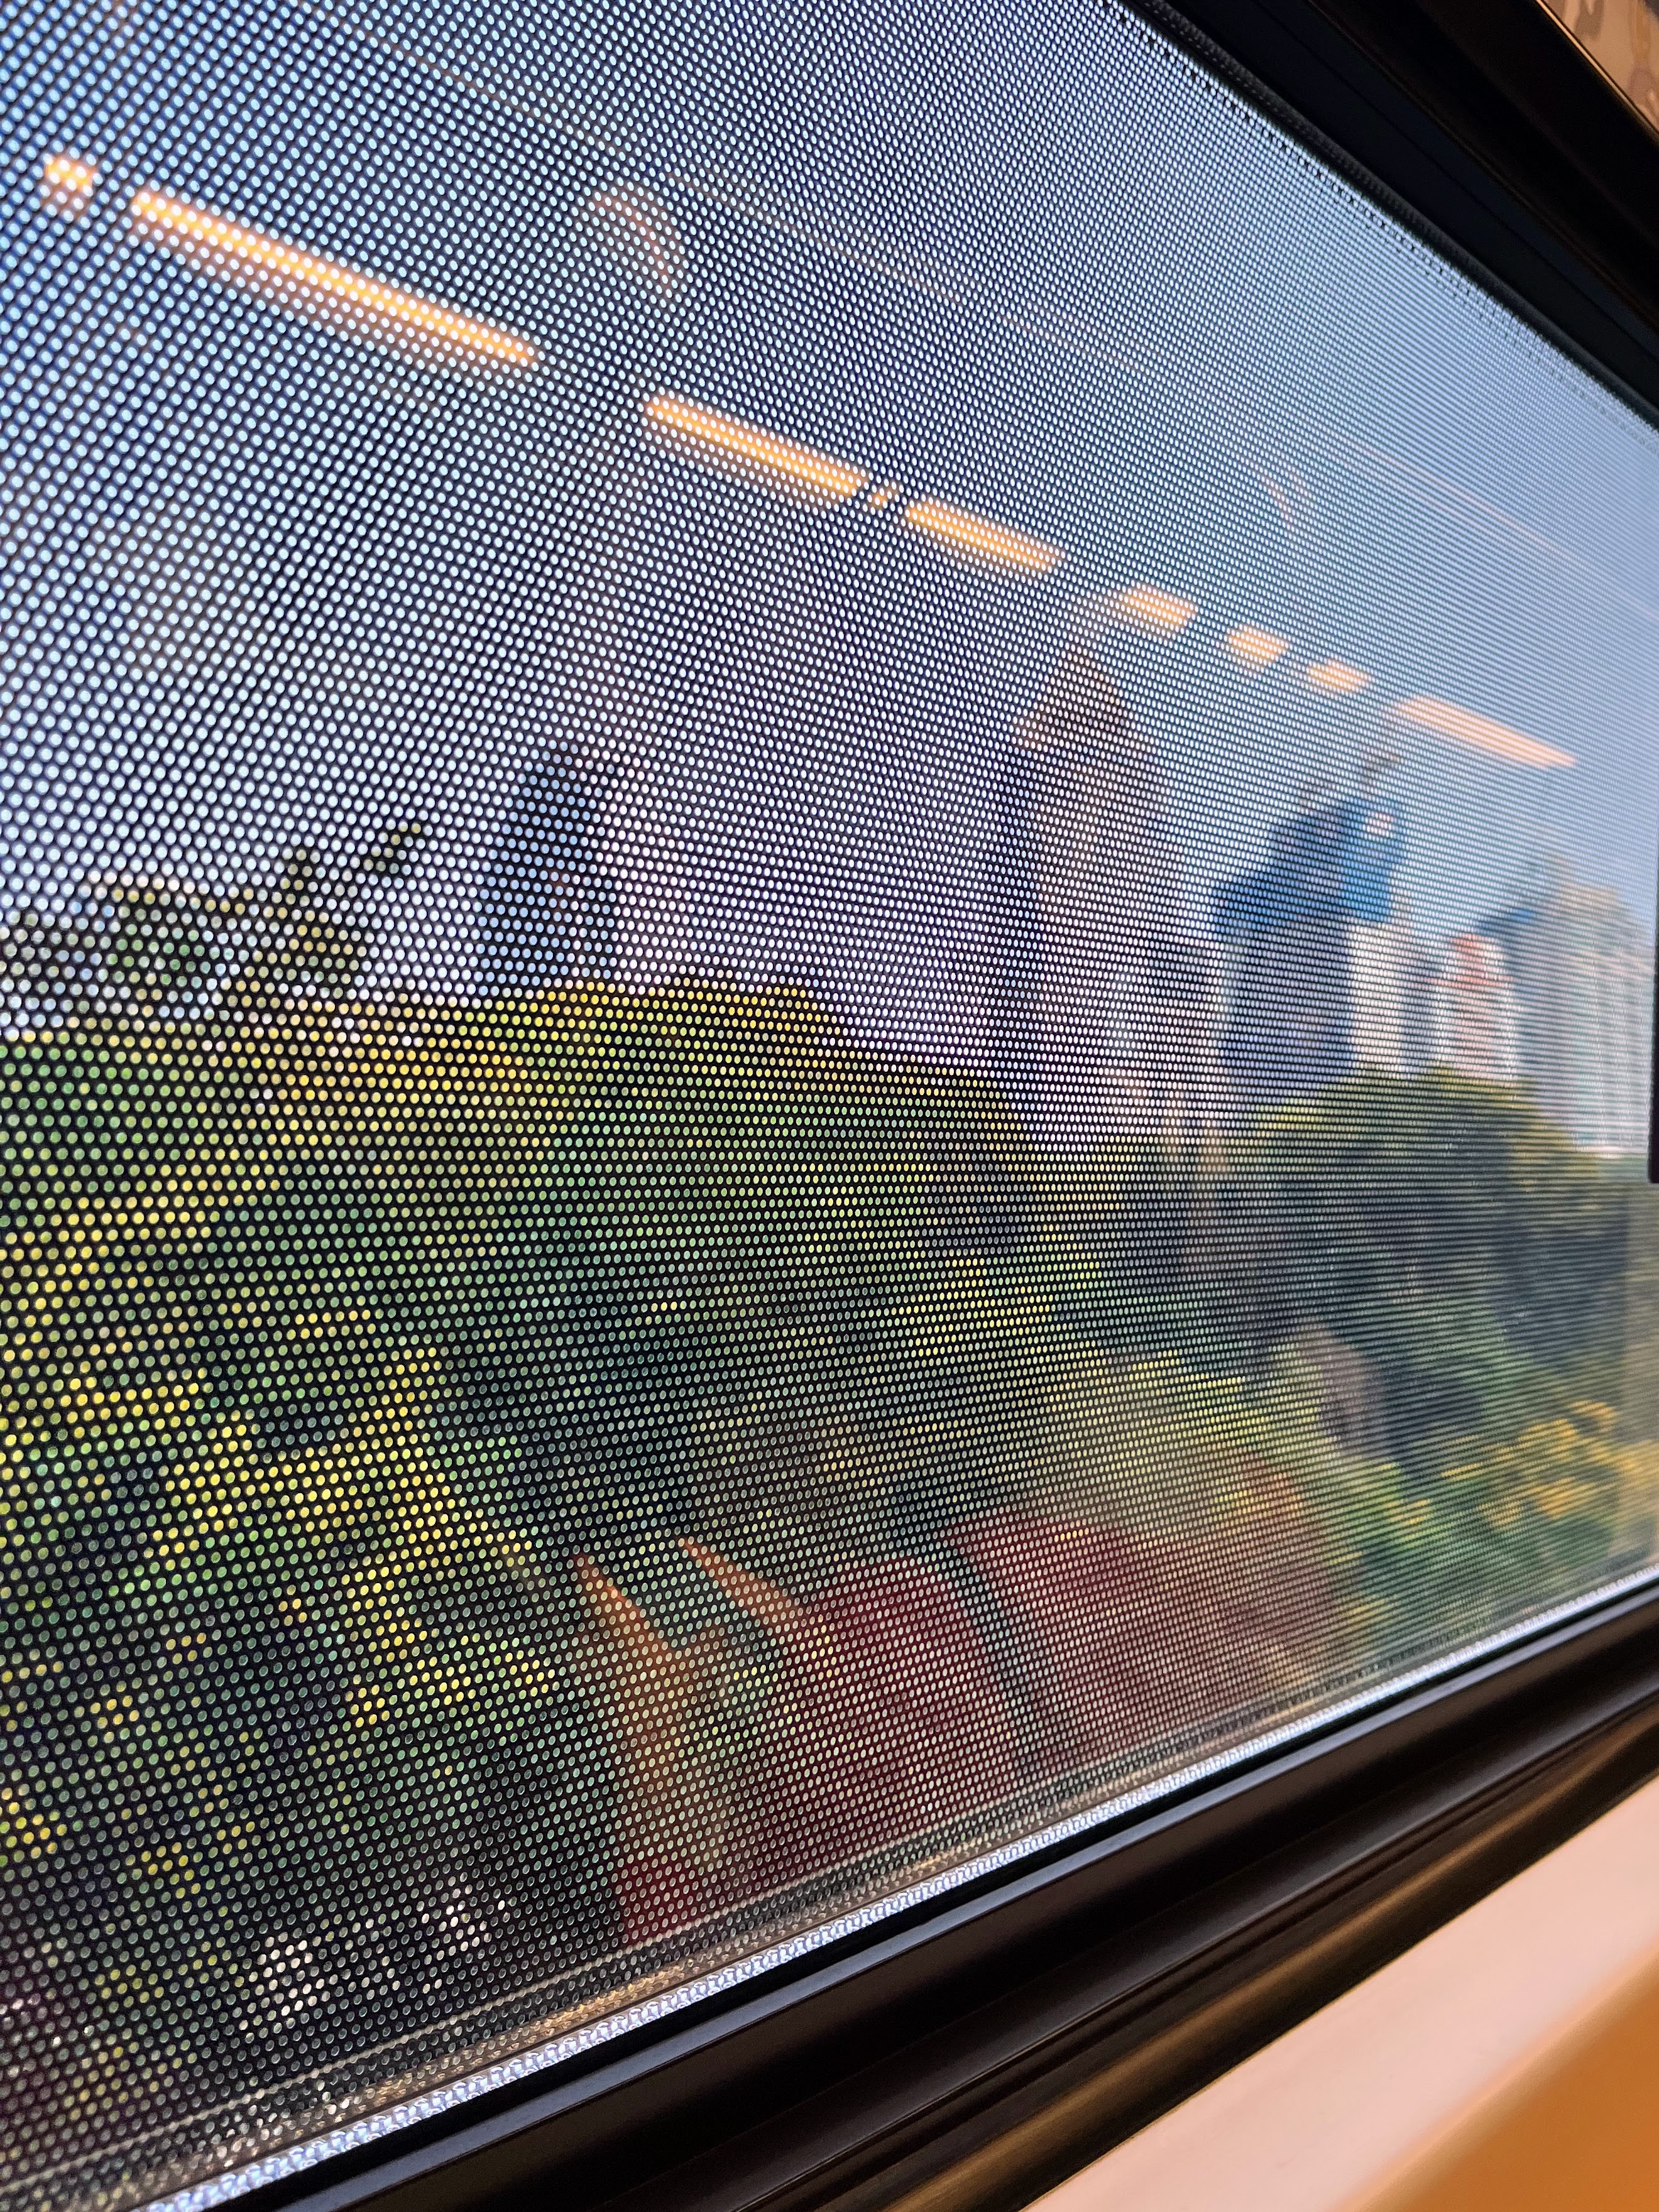 train window view